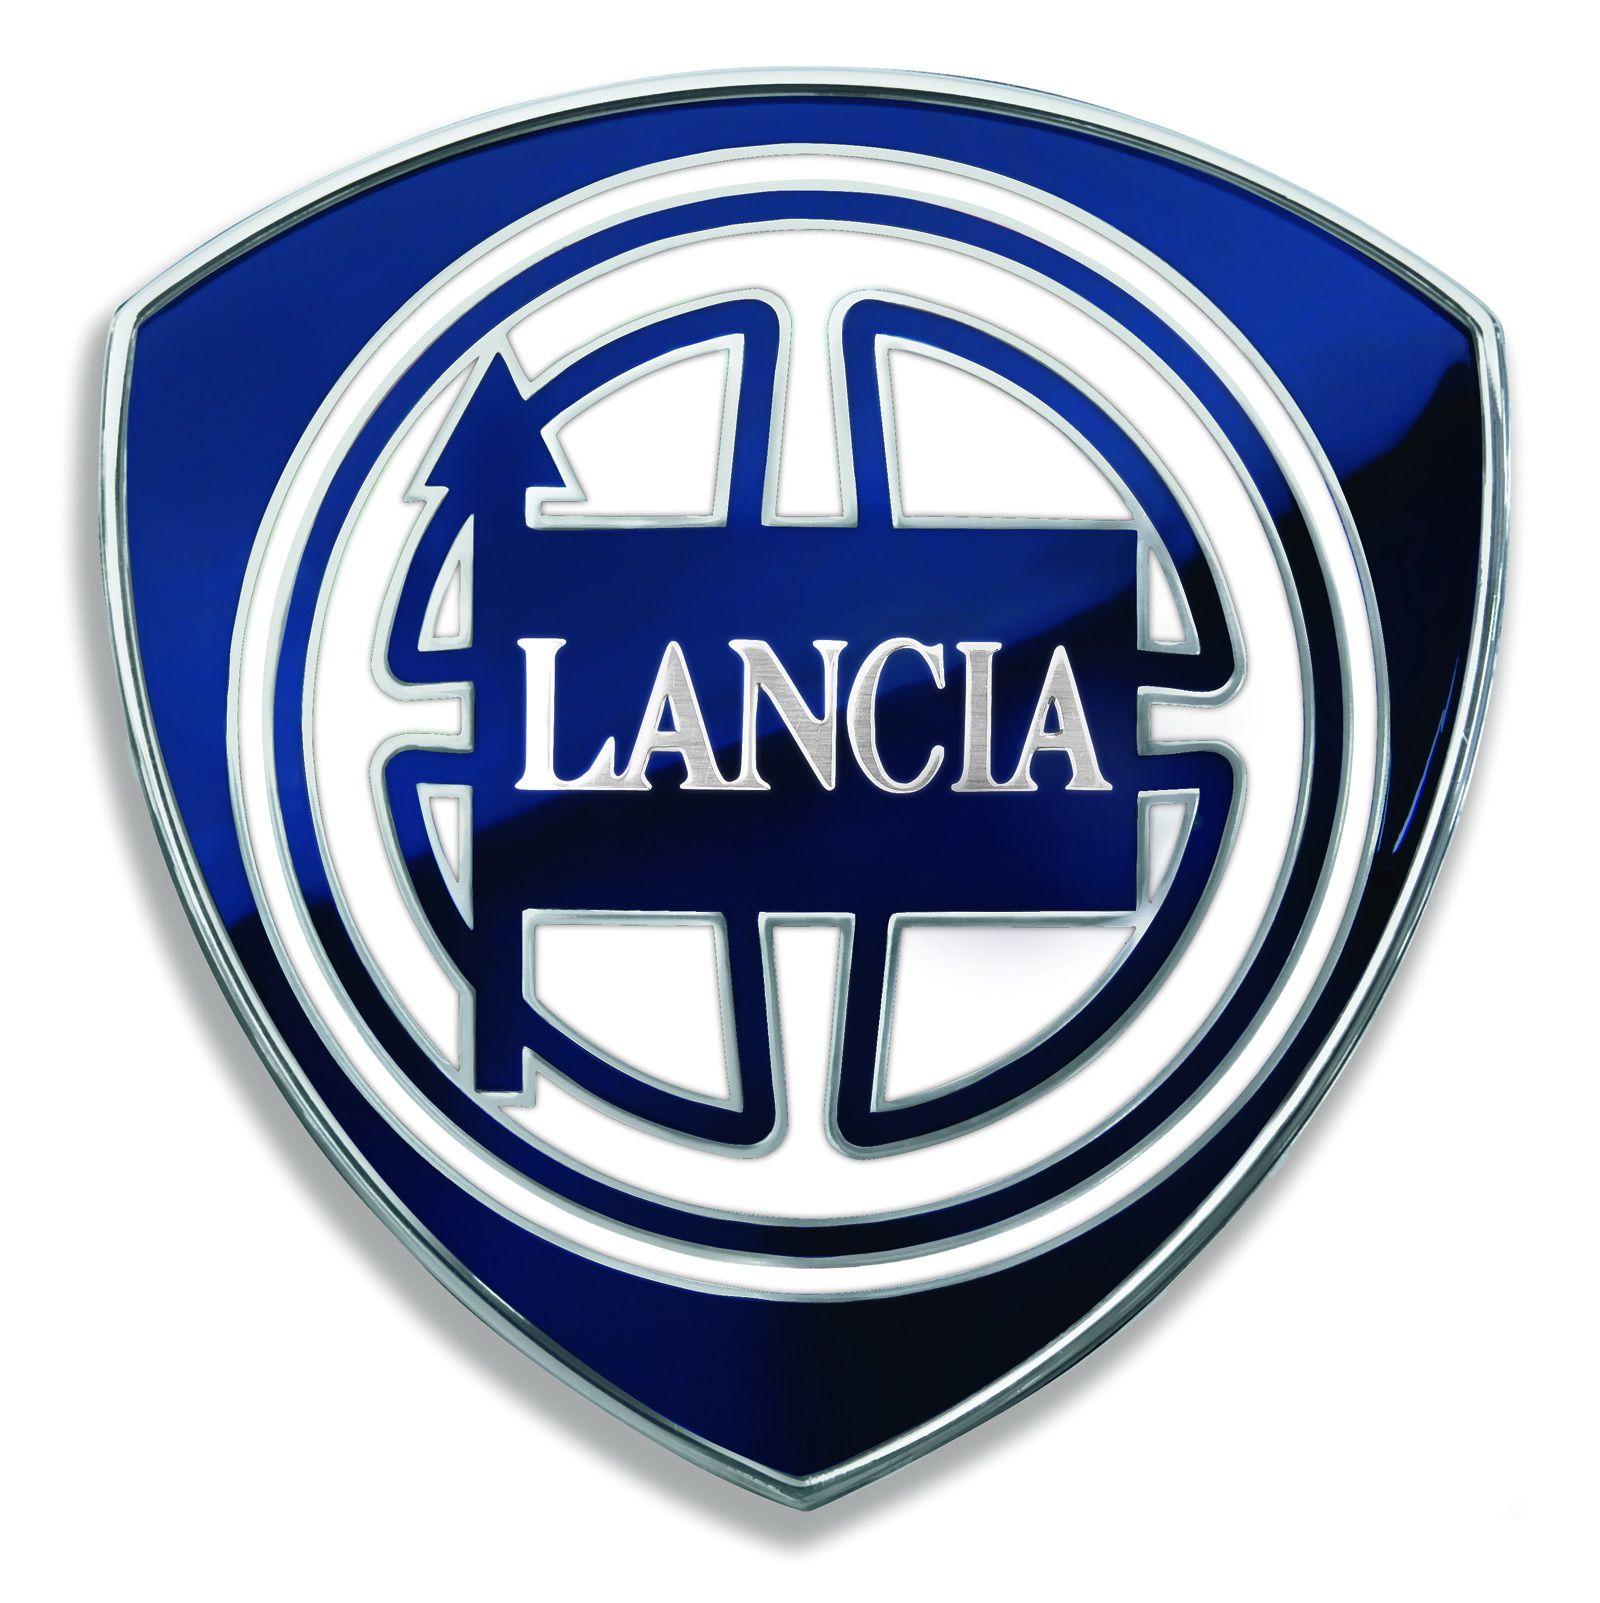 Lancia Car Logo - Lancia Logo, Lancia Car Symbol Meaning and History | Car Brand Names.com